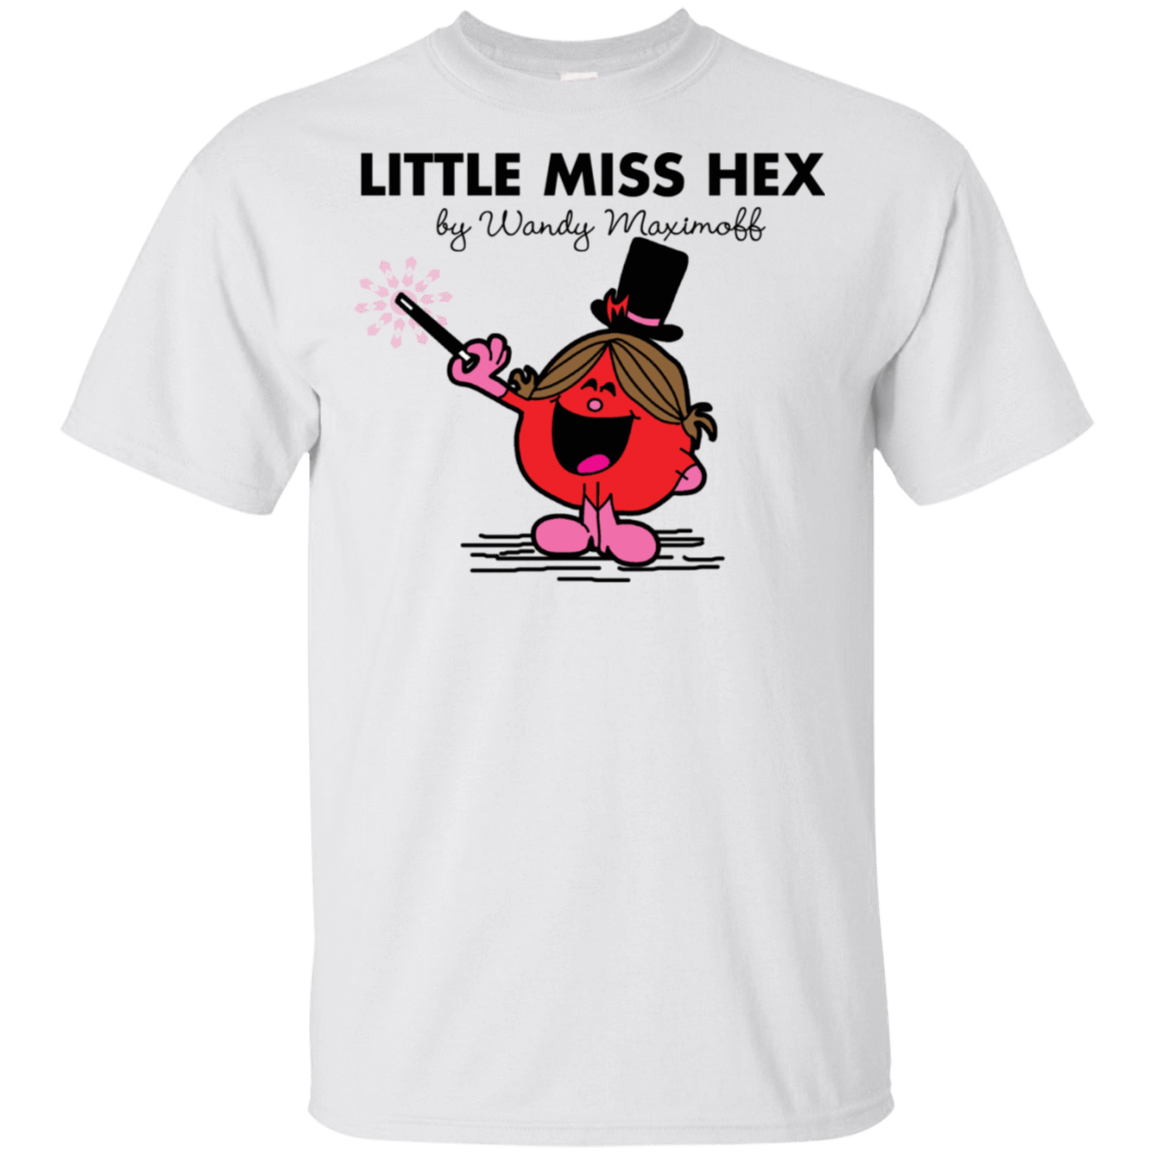 T-Shirts White / S Little Miss Hex T-Shirt